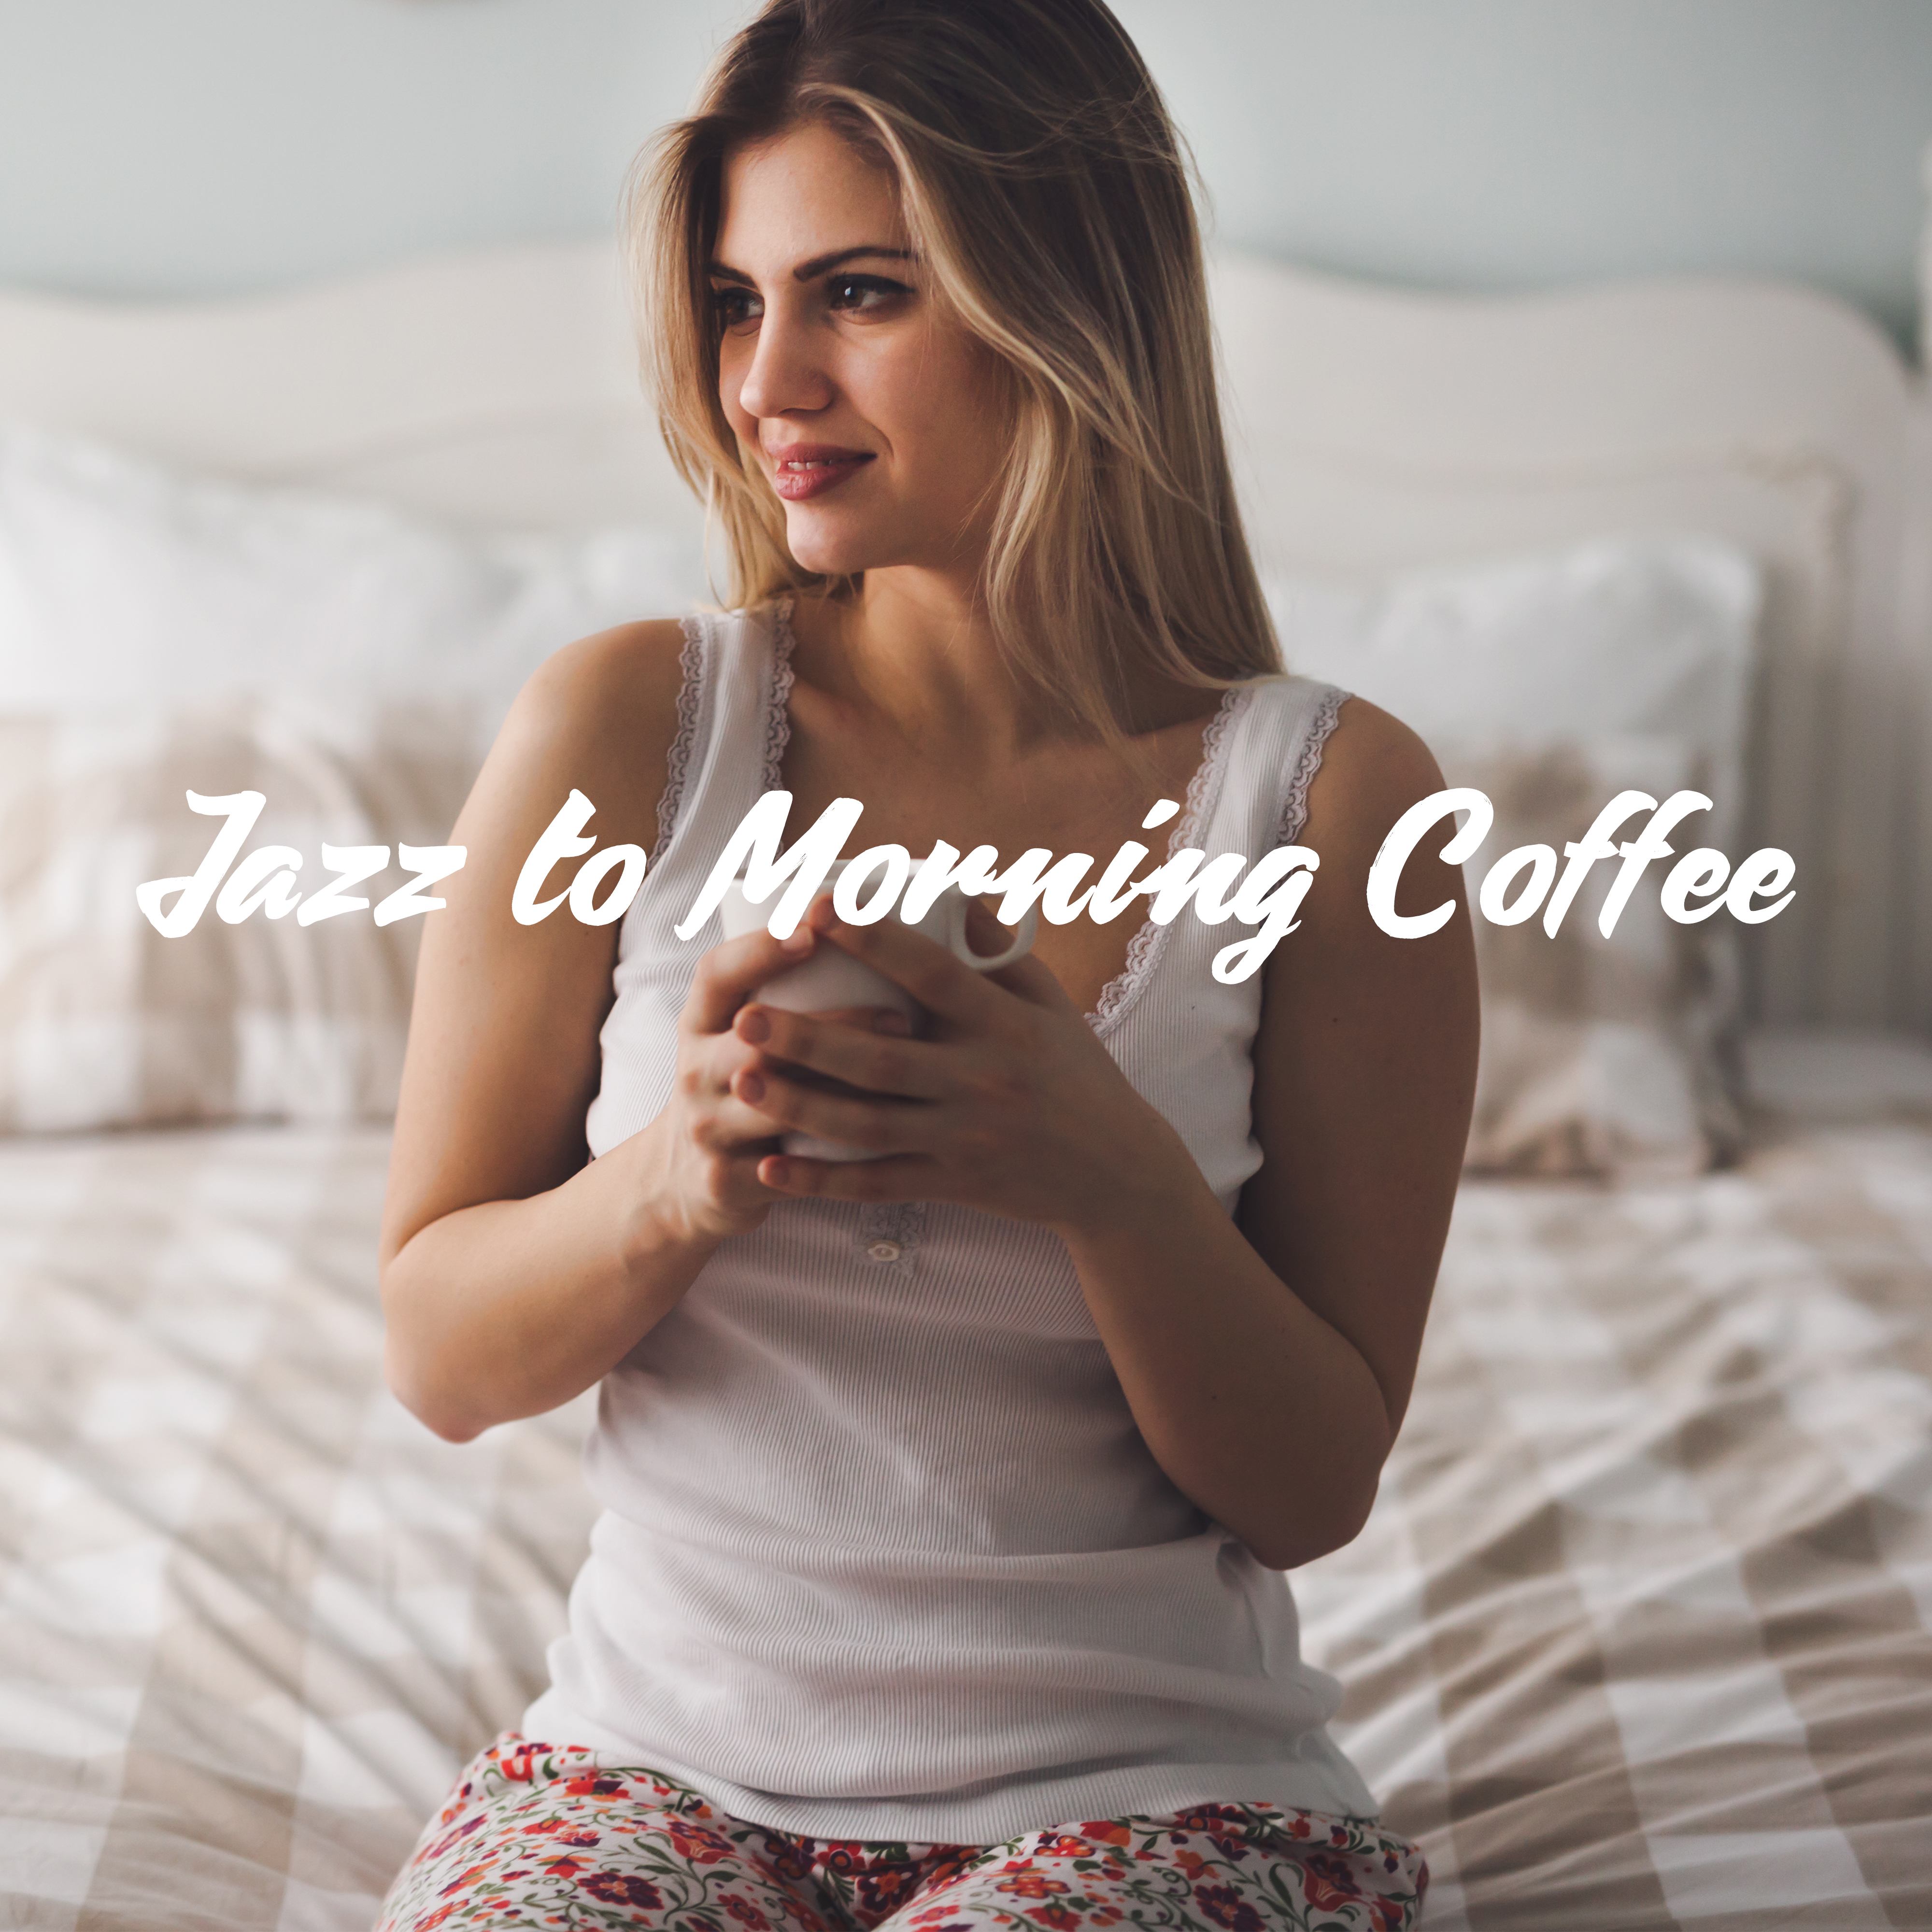 Jazz to Morning Coffee